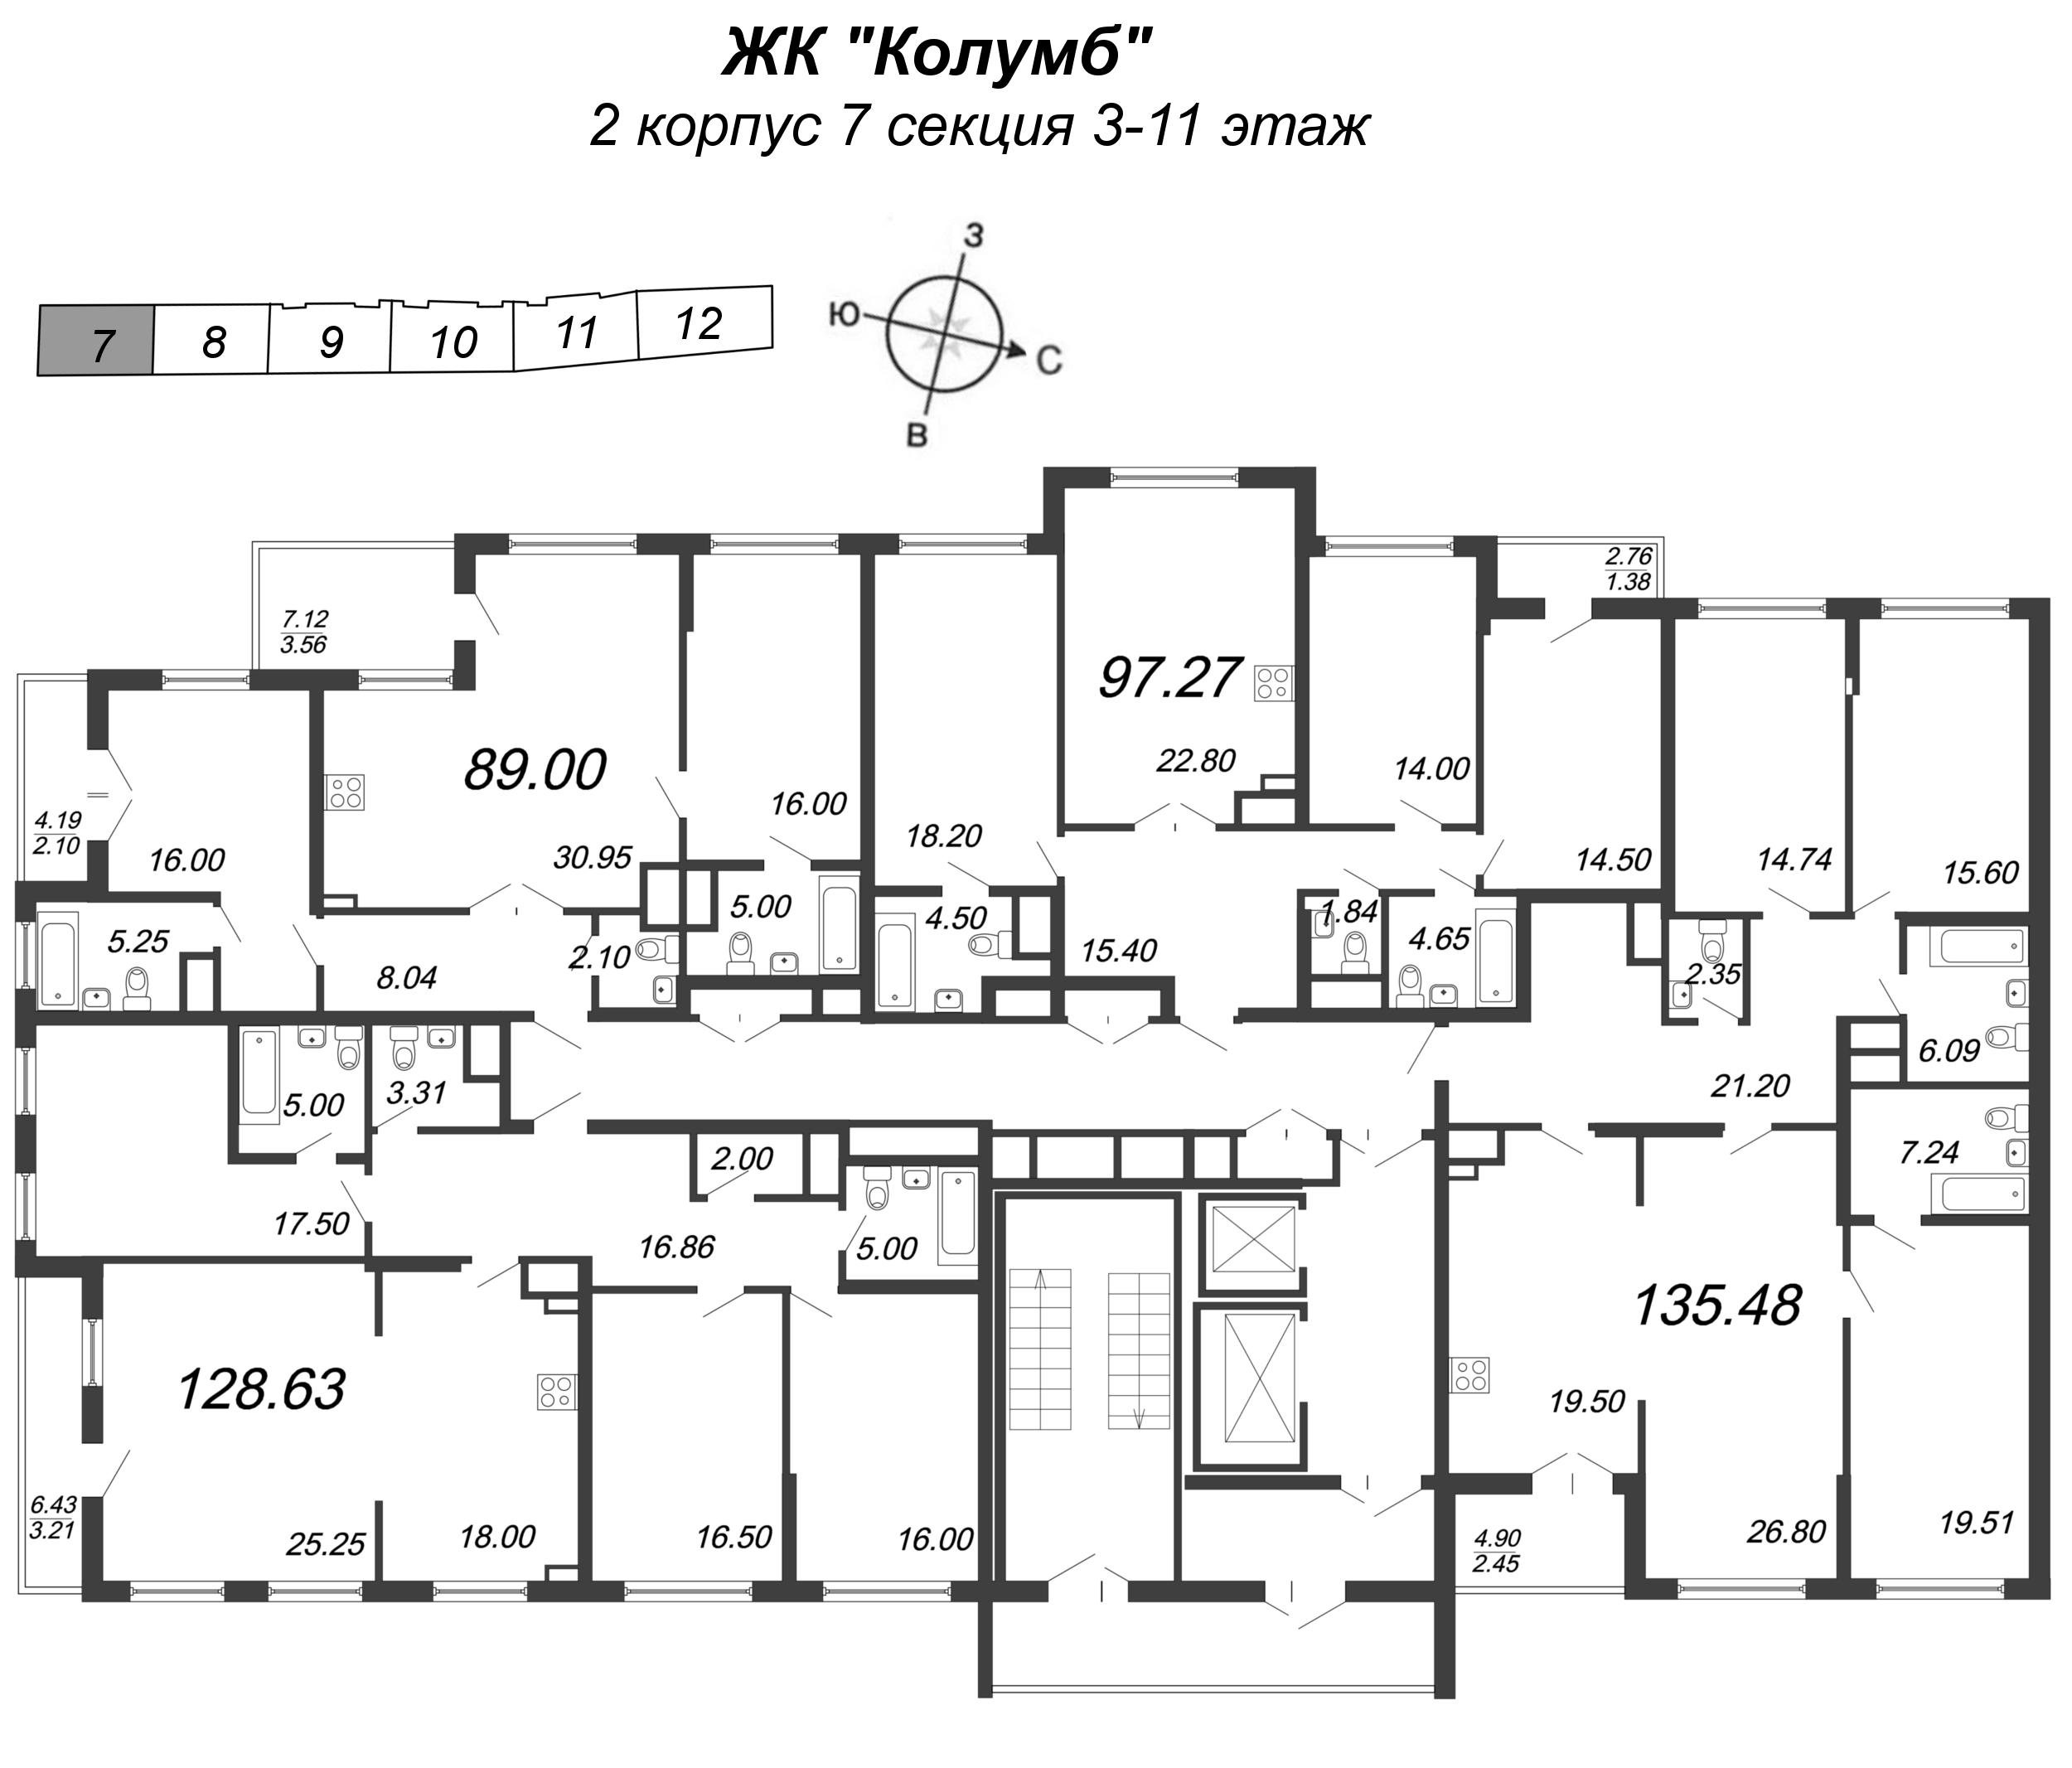 4-комнатная (Евро) квартира, 97.6 м² - планировка этажа